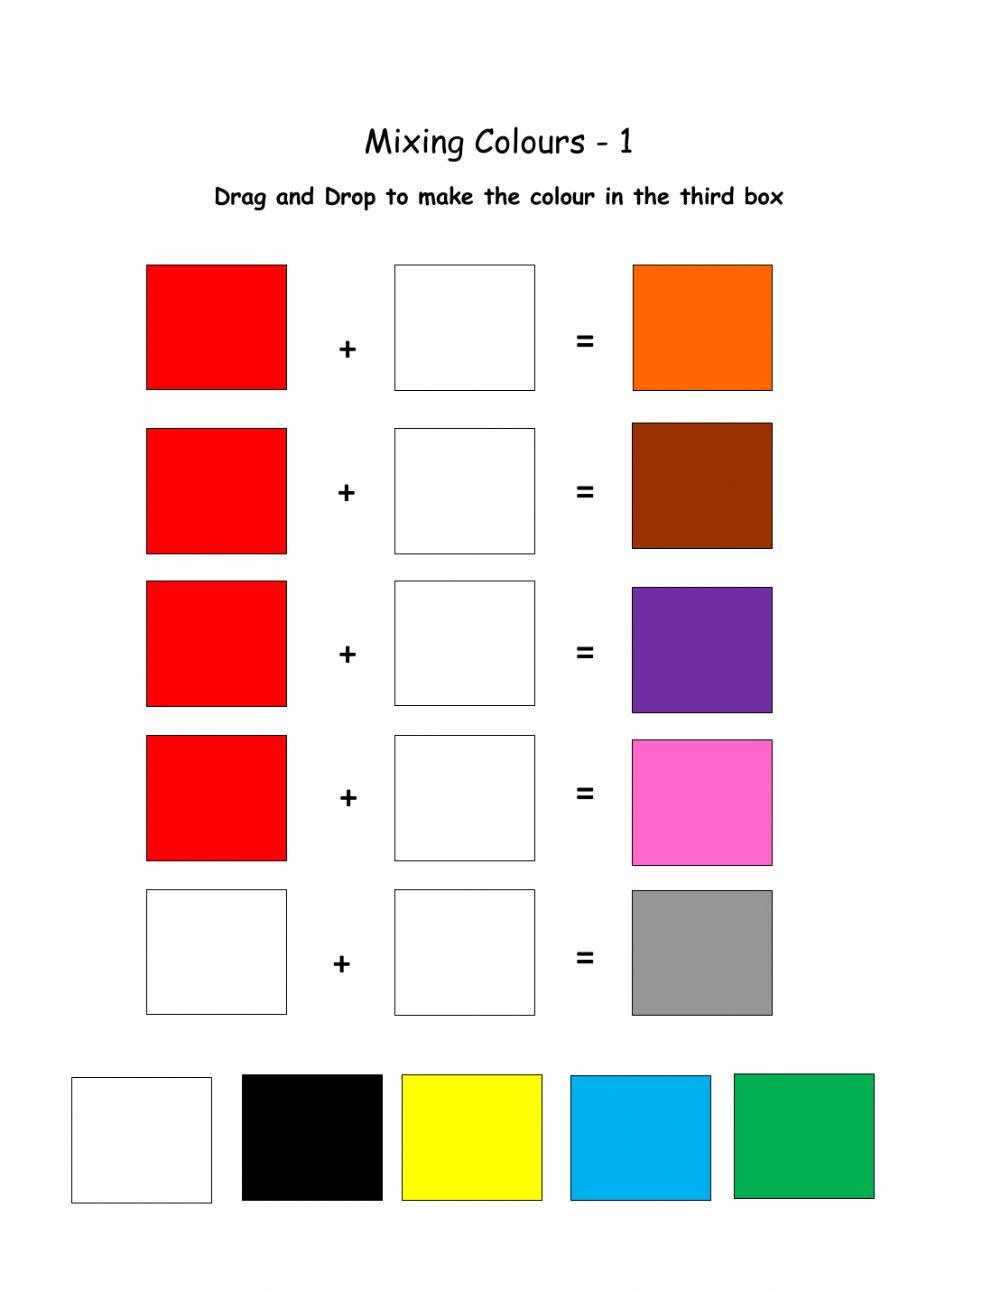 Mixing Colours - 1